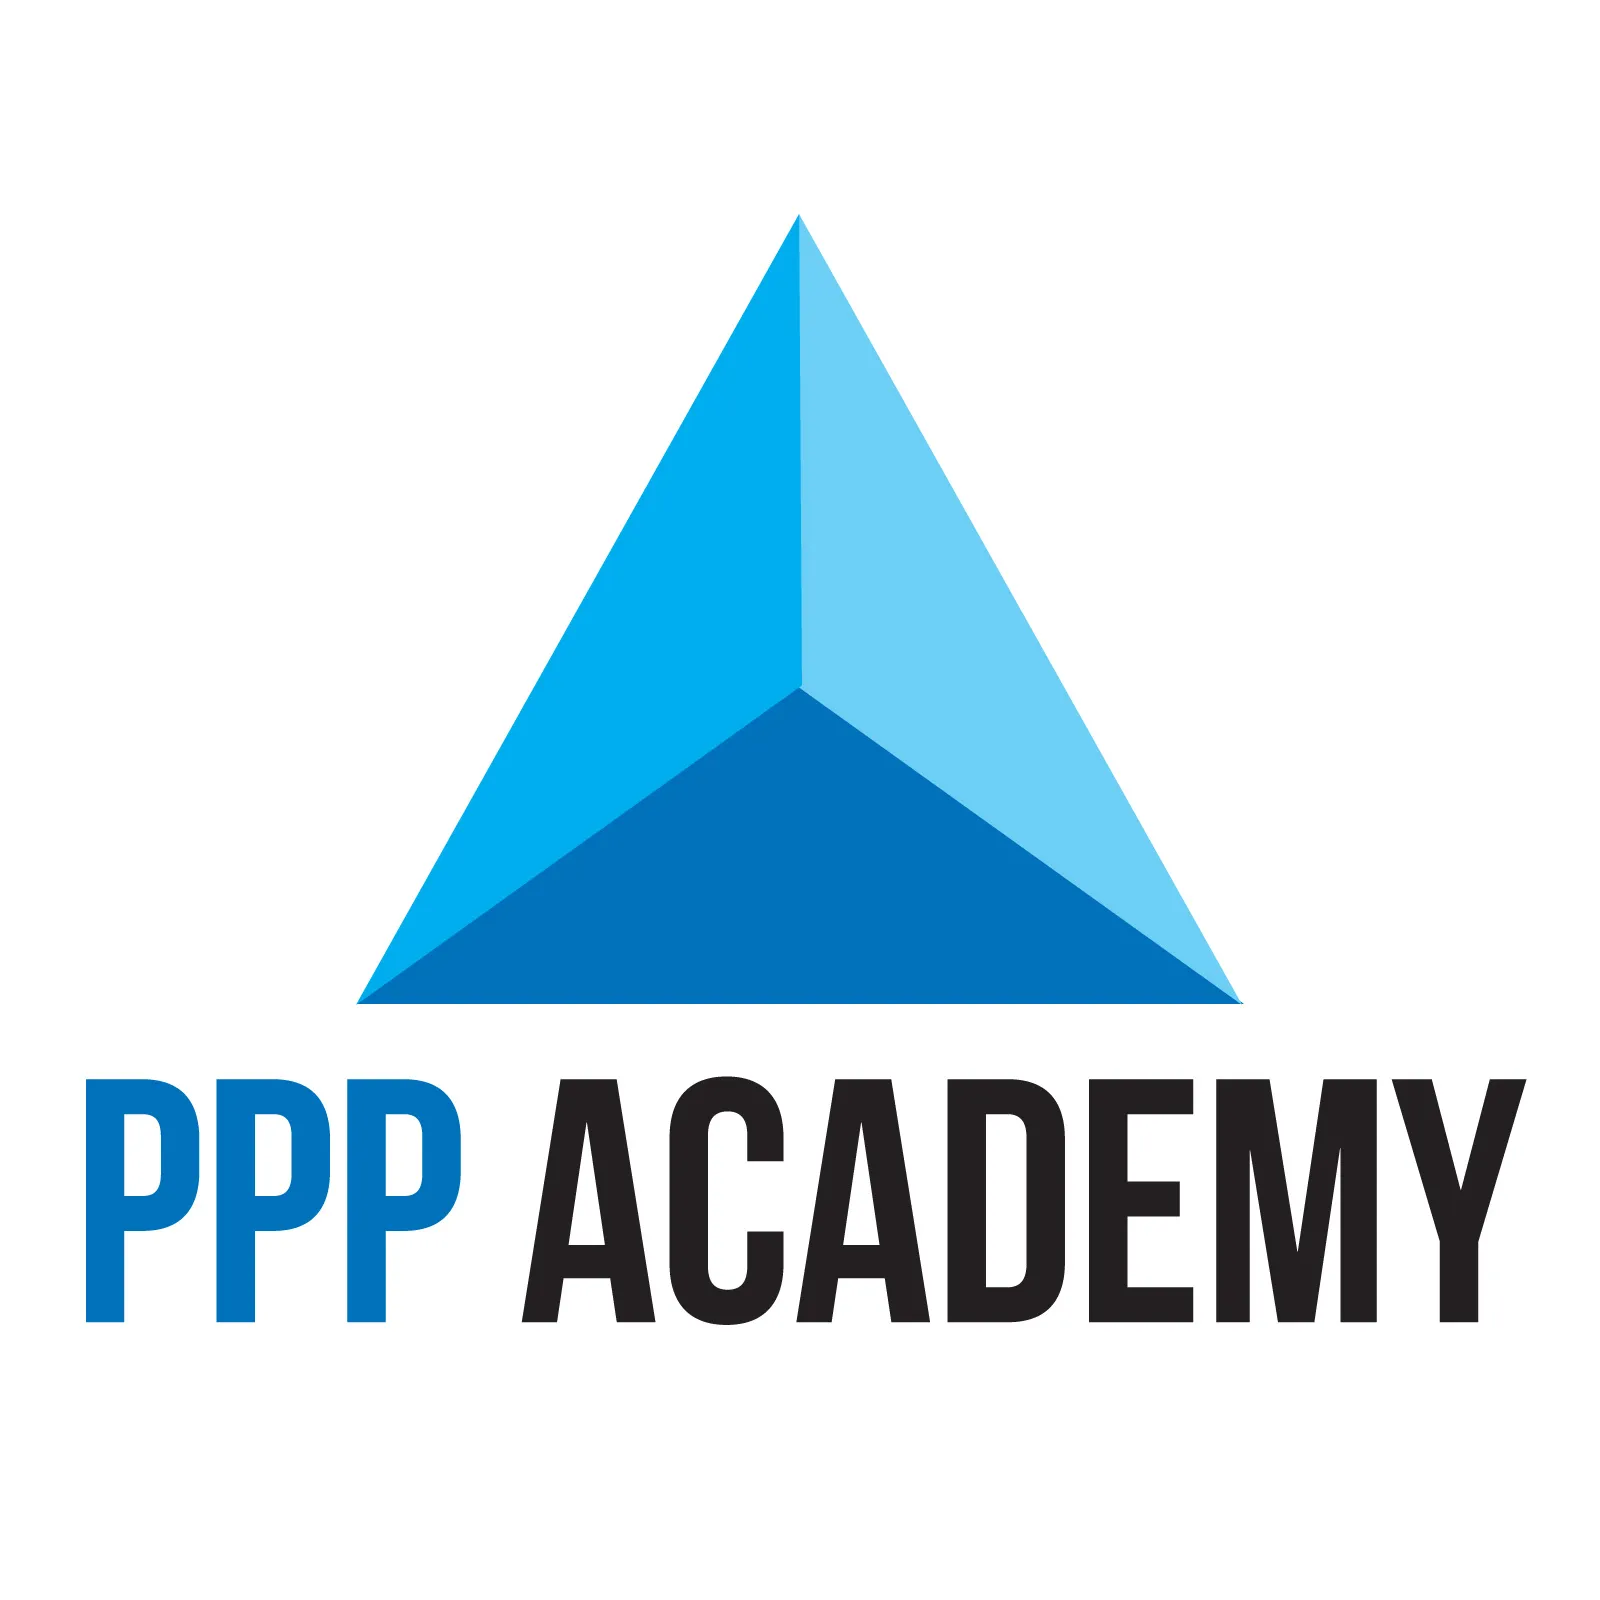 PPP Academy Logo